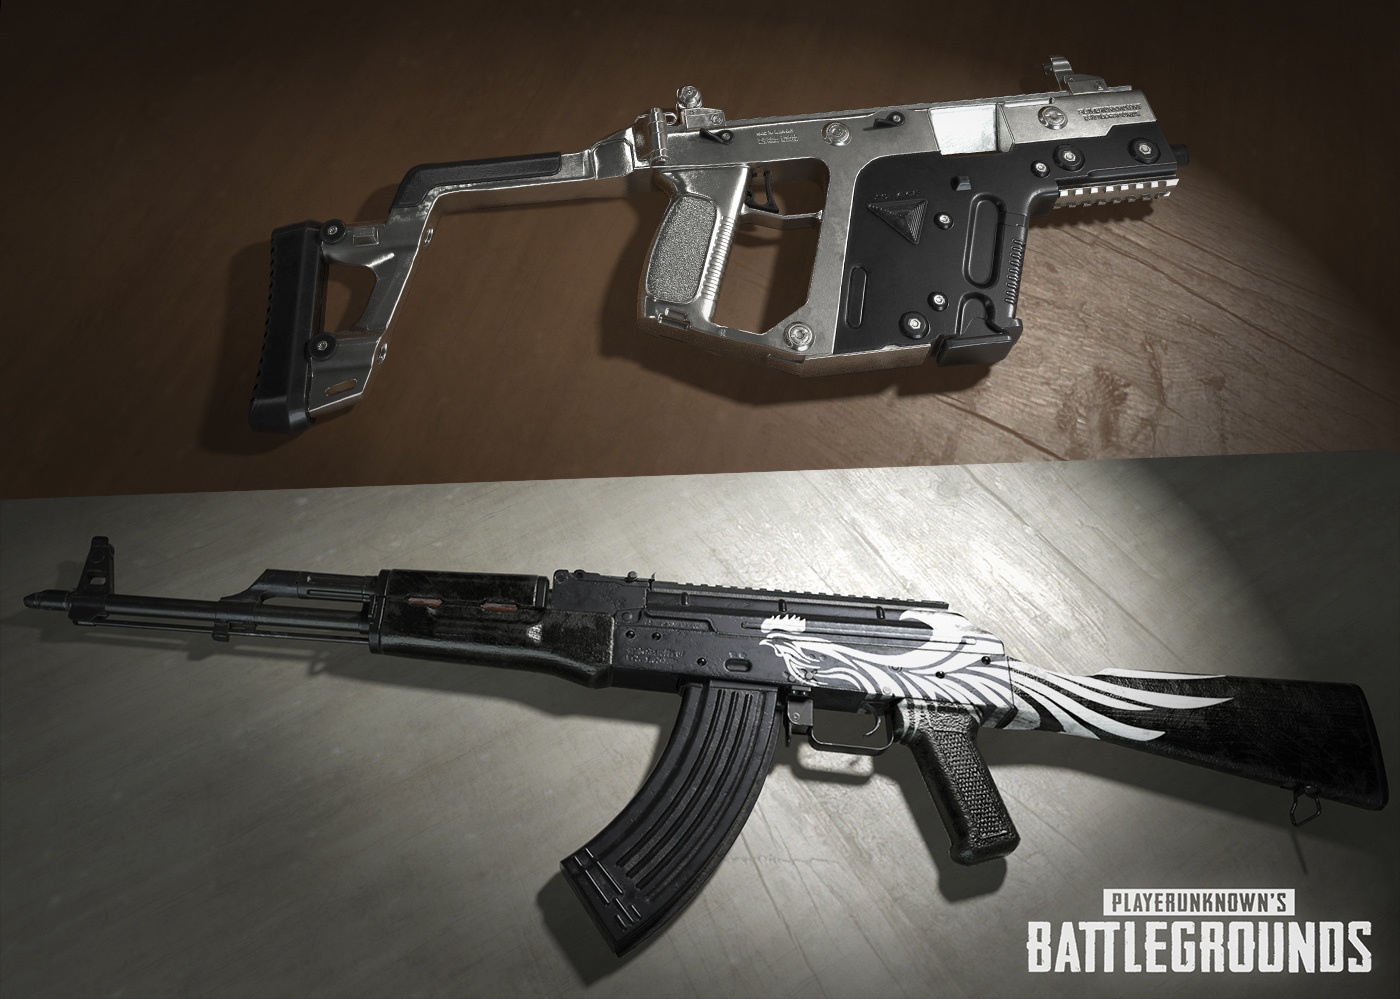 playerunknown's battlegrounds - pubg guns & weapons skins